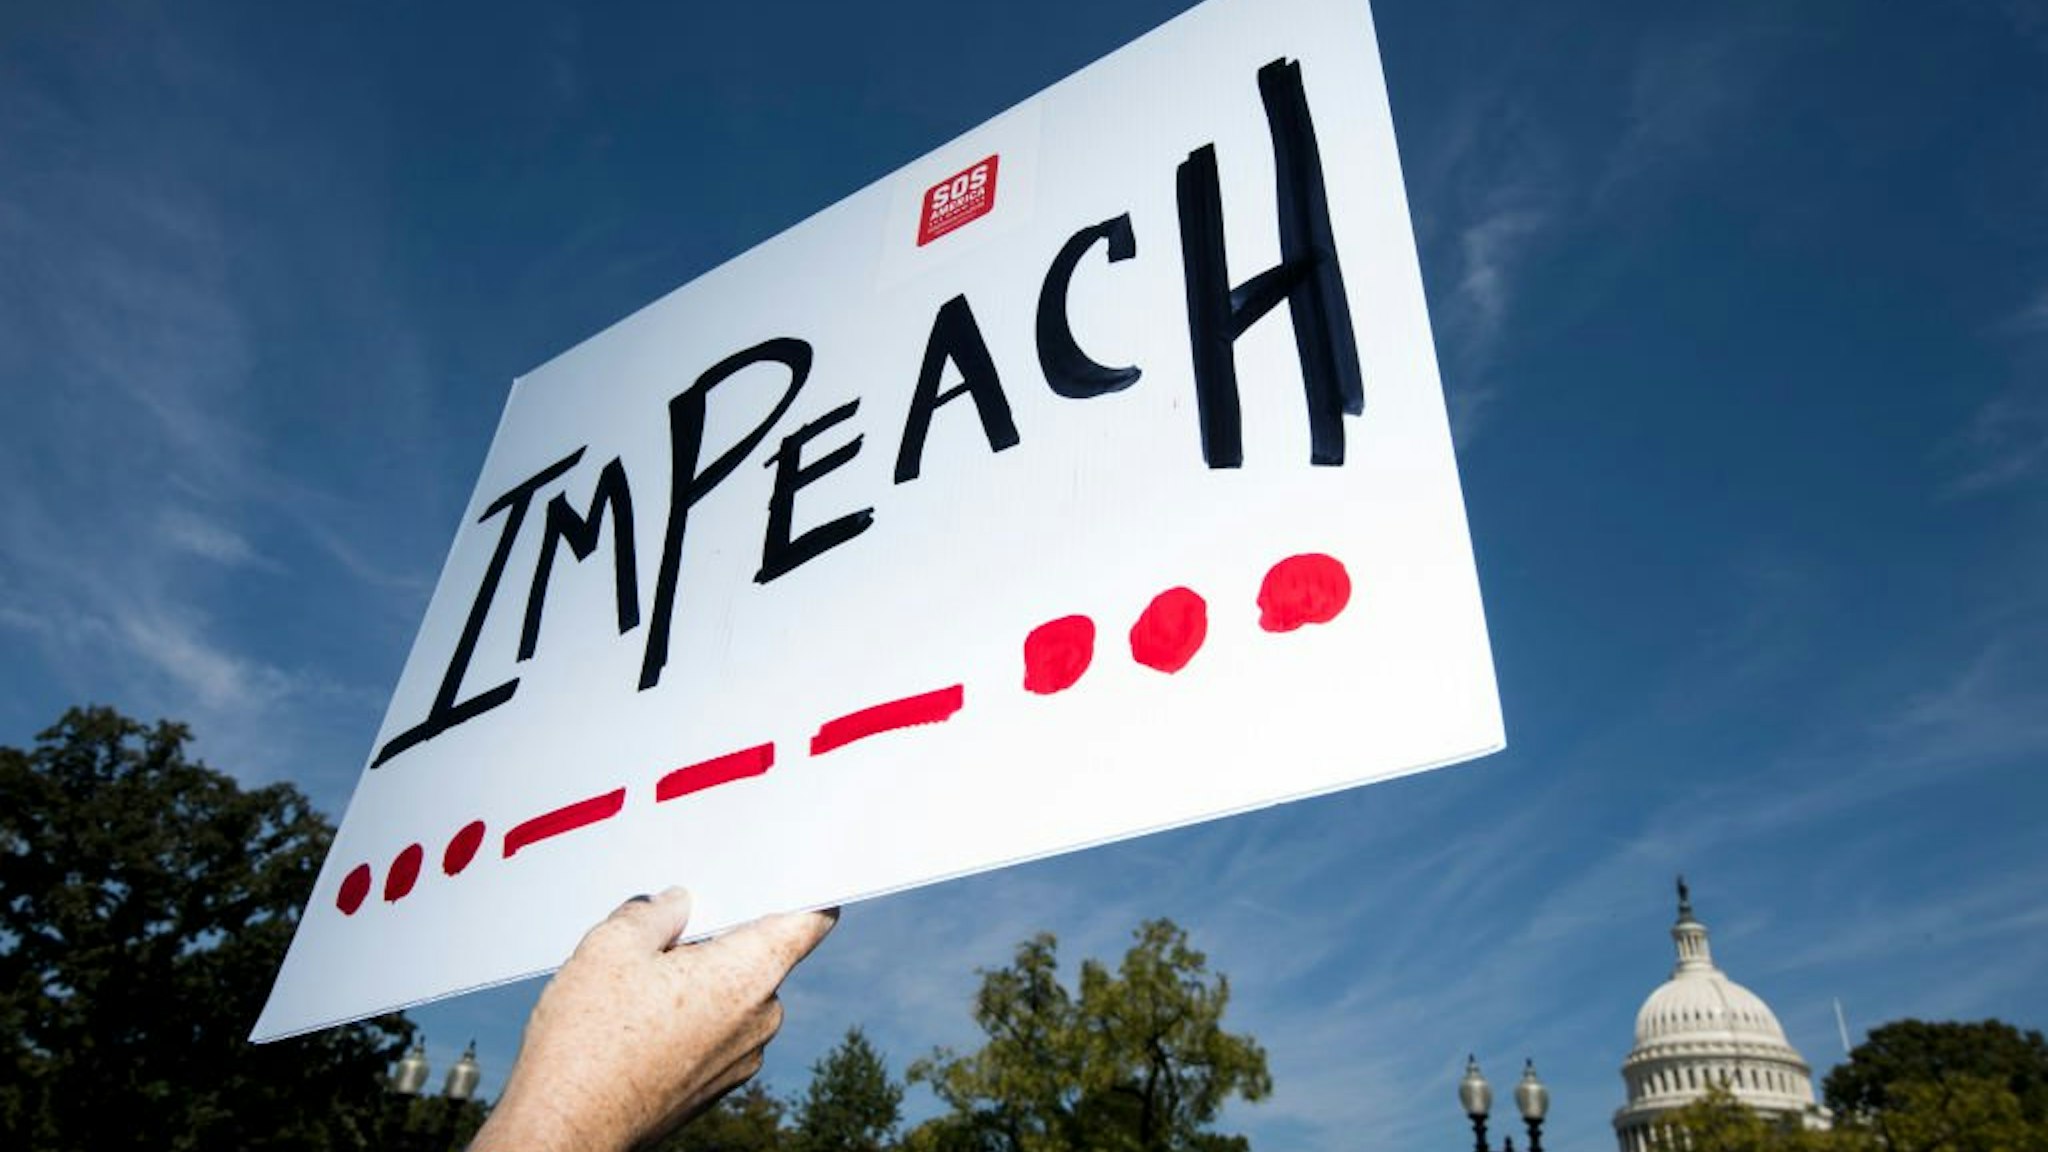 An "Impeach" protest sign